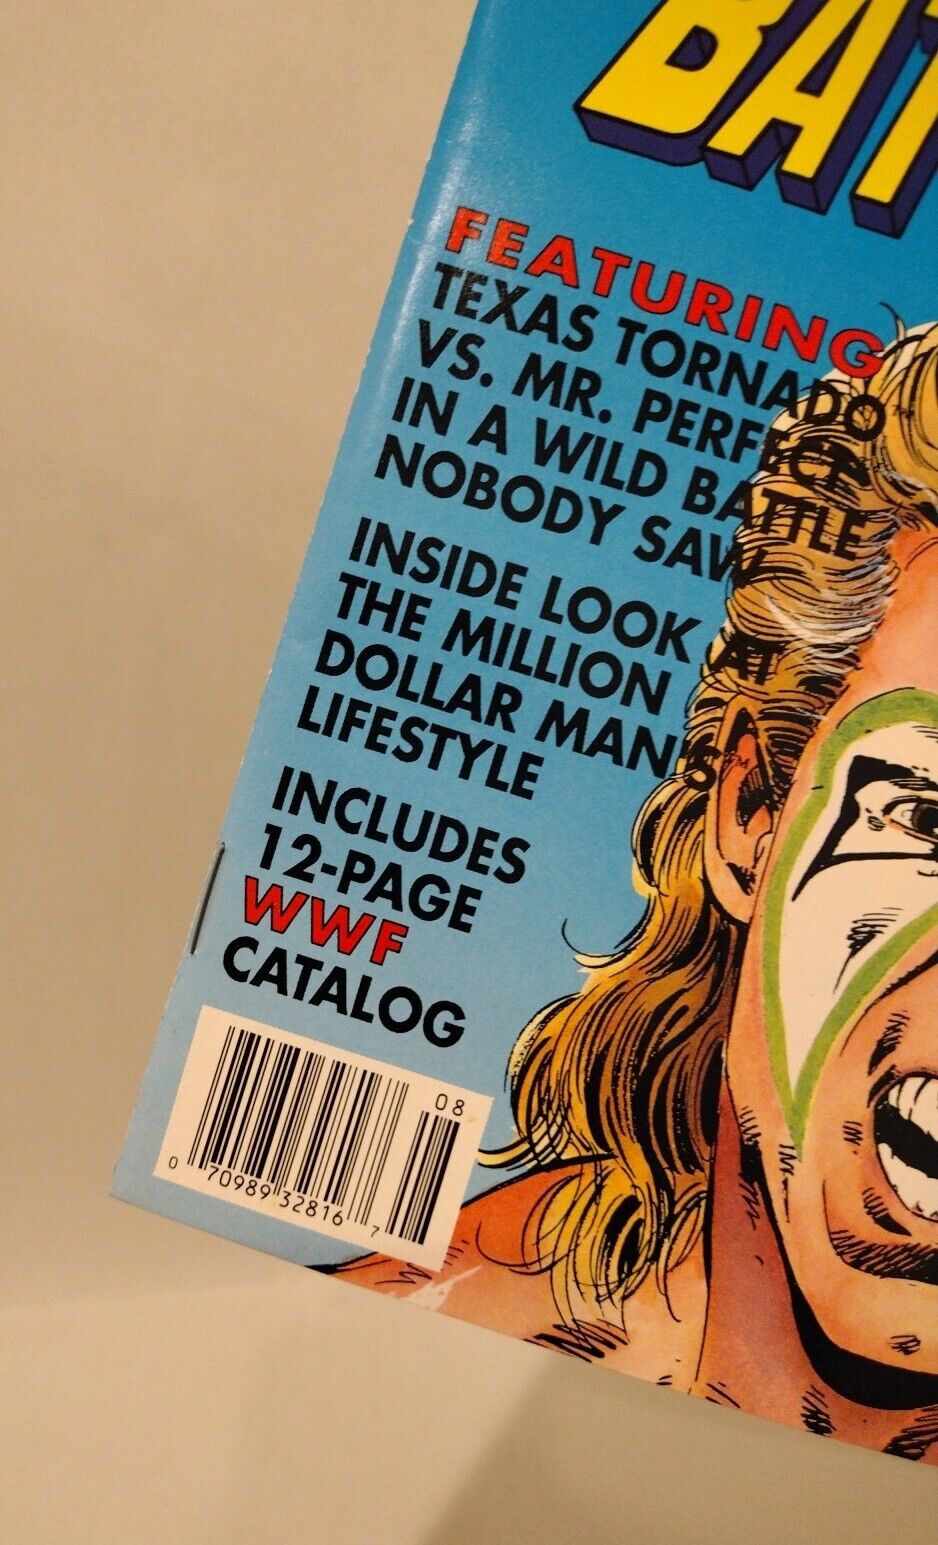 WWF Battlemania #1 (1991) Valiant Comic Complete w Poster & Inserts VF-NM WWE